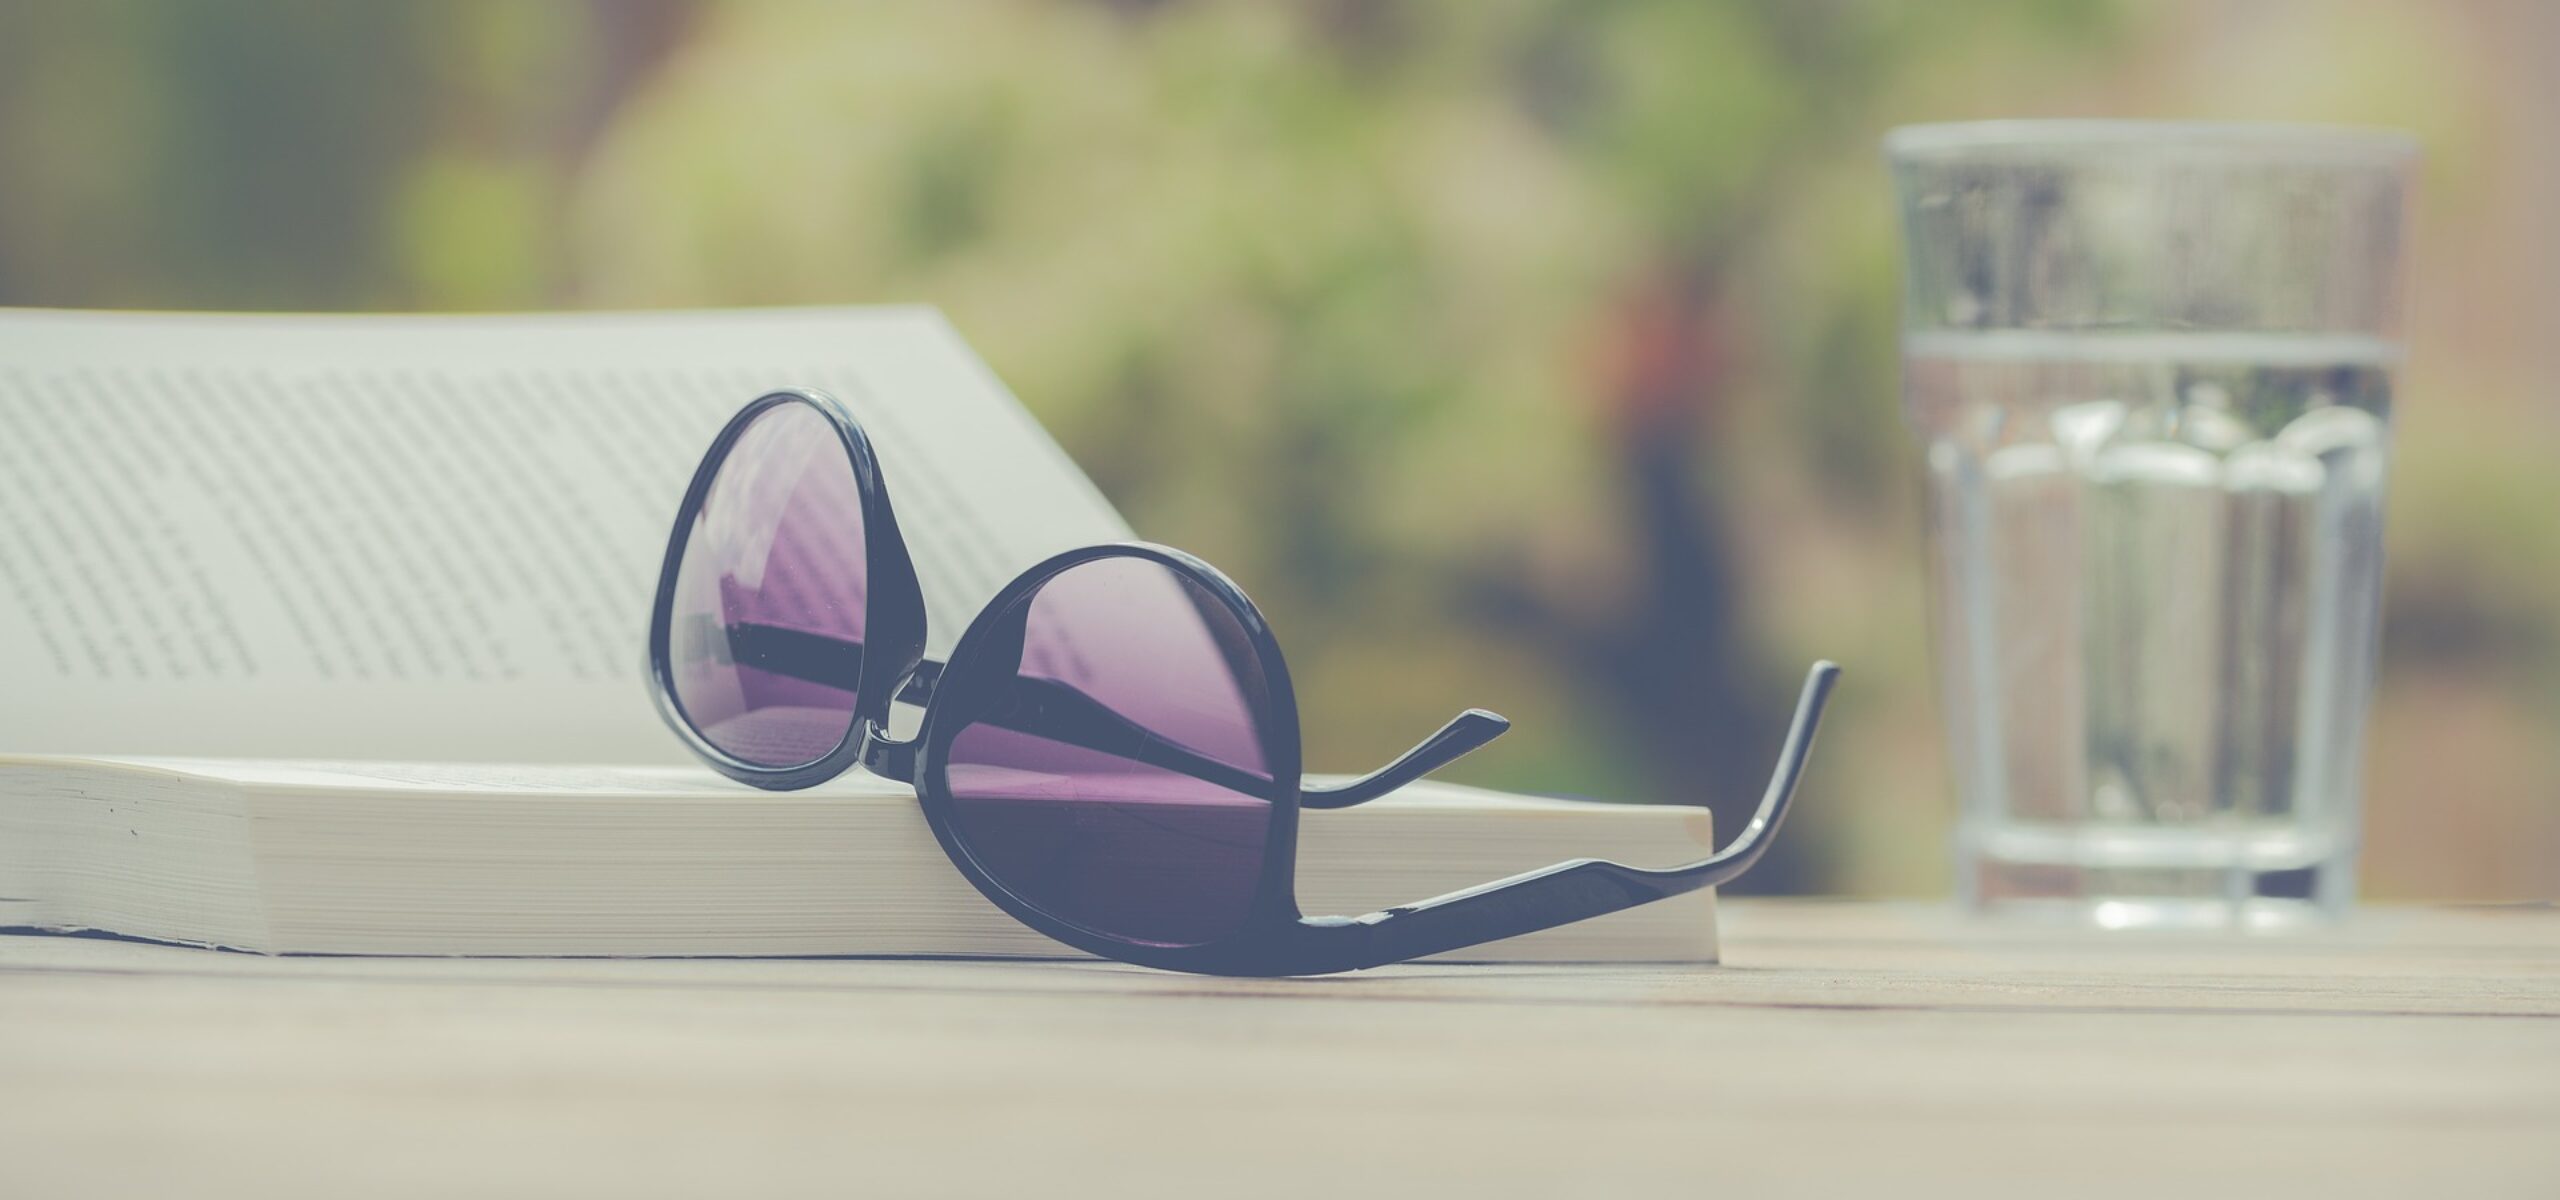 Sunglasses to protect eyes against UV light